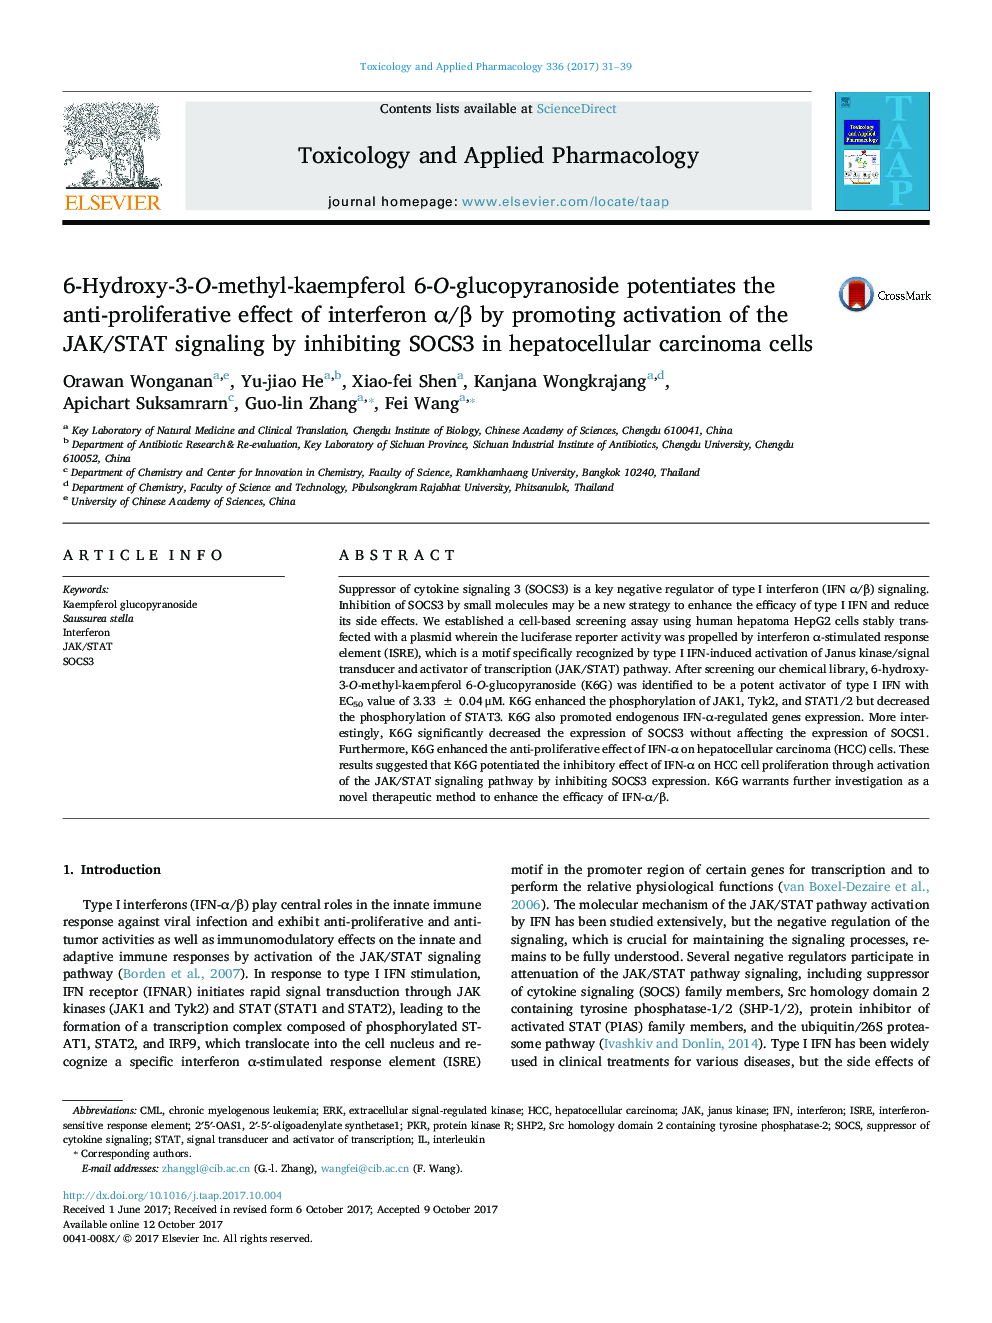 6-Hydroxy-3-O-methyl-kaempferol 6-O-glucopyranoside potentiates the anti-proliferative effect of interferon Î±/Î² by promoting activation of the JAK/STAT signaling by inhibiting SOCS3 in hepatocellular carcinoma cells